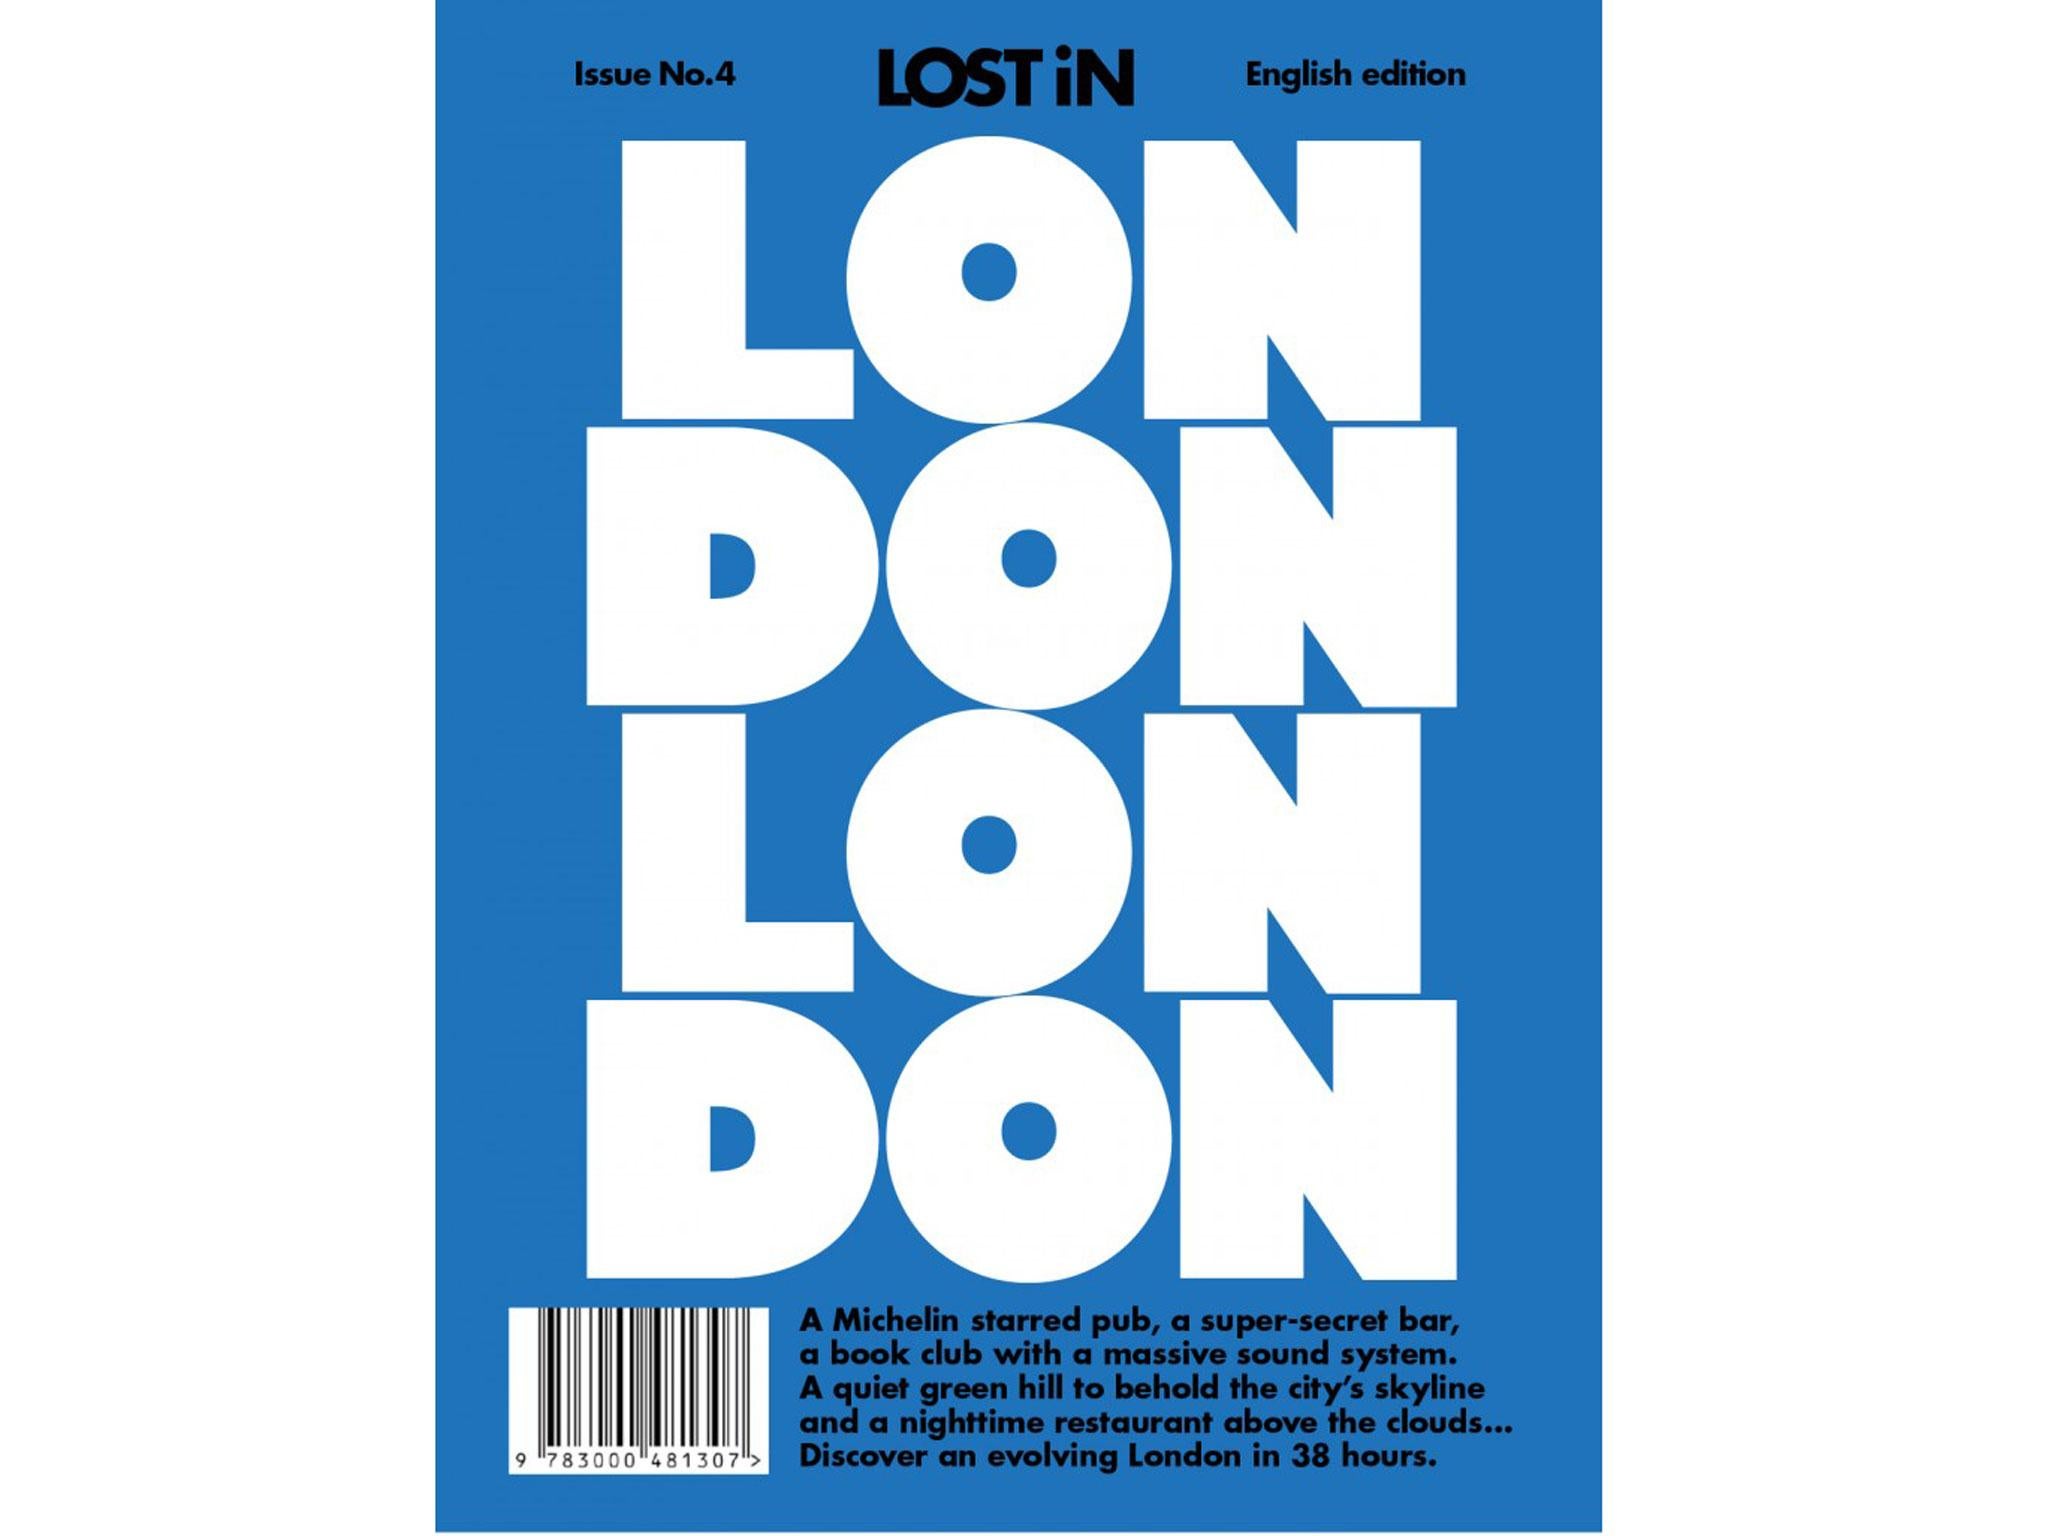 travel book london